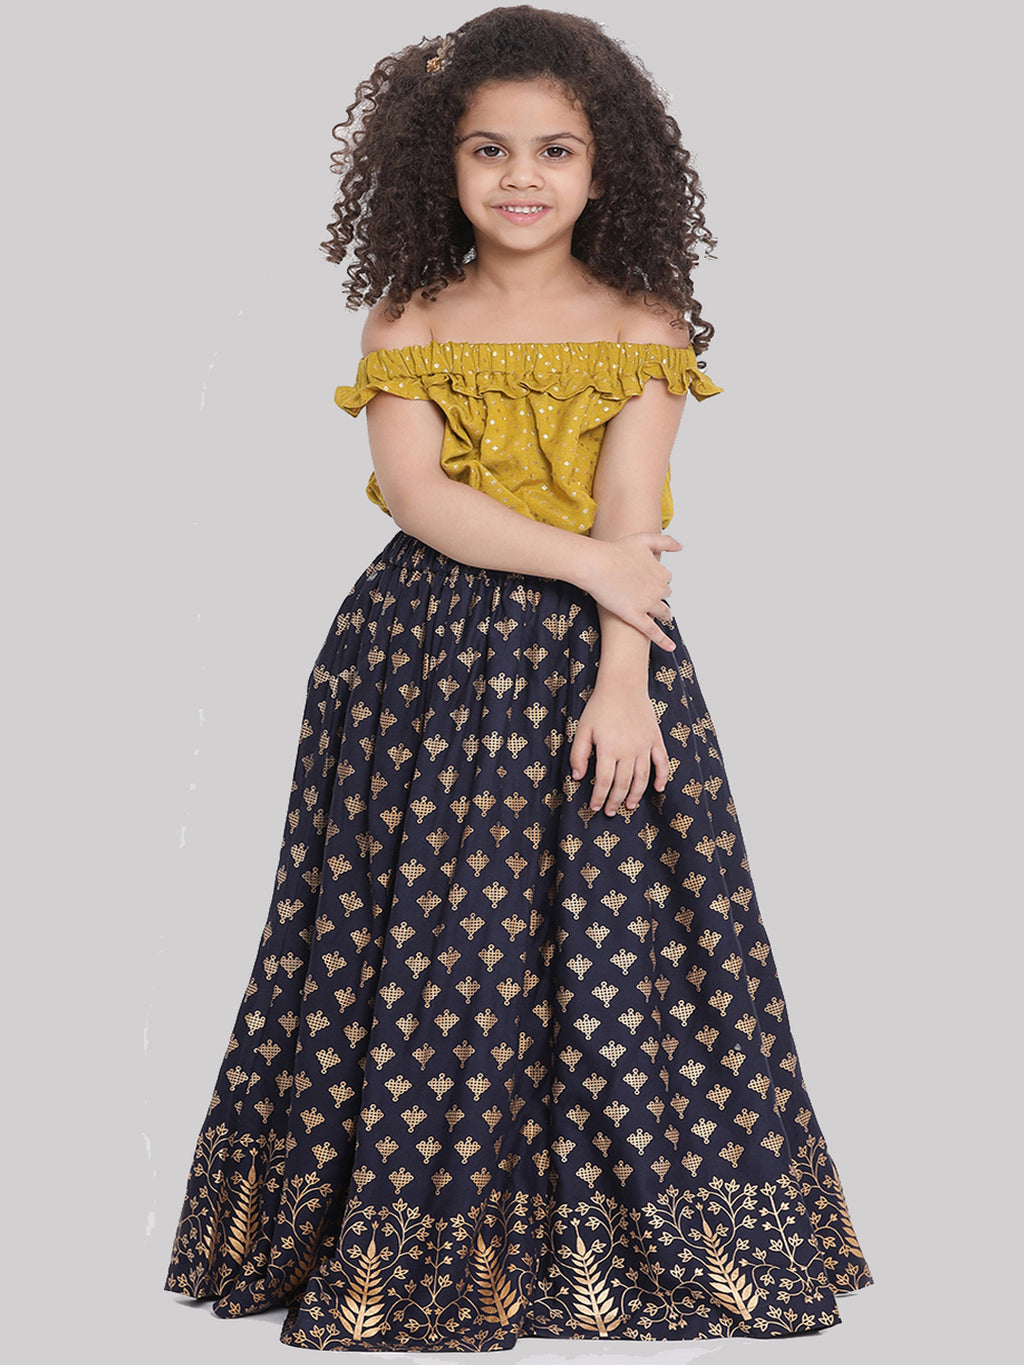 ethnic wear for girl baby